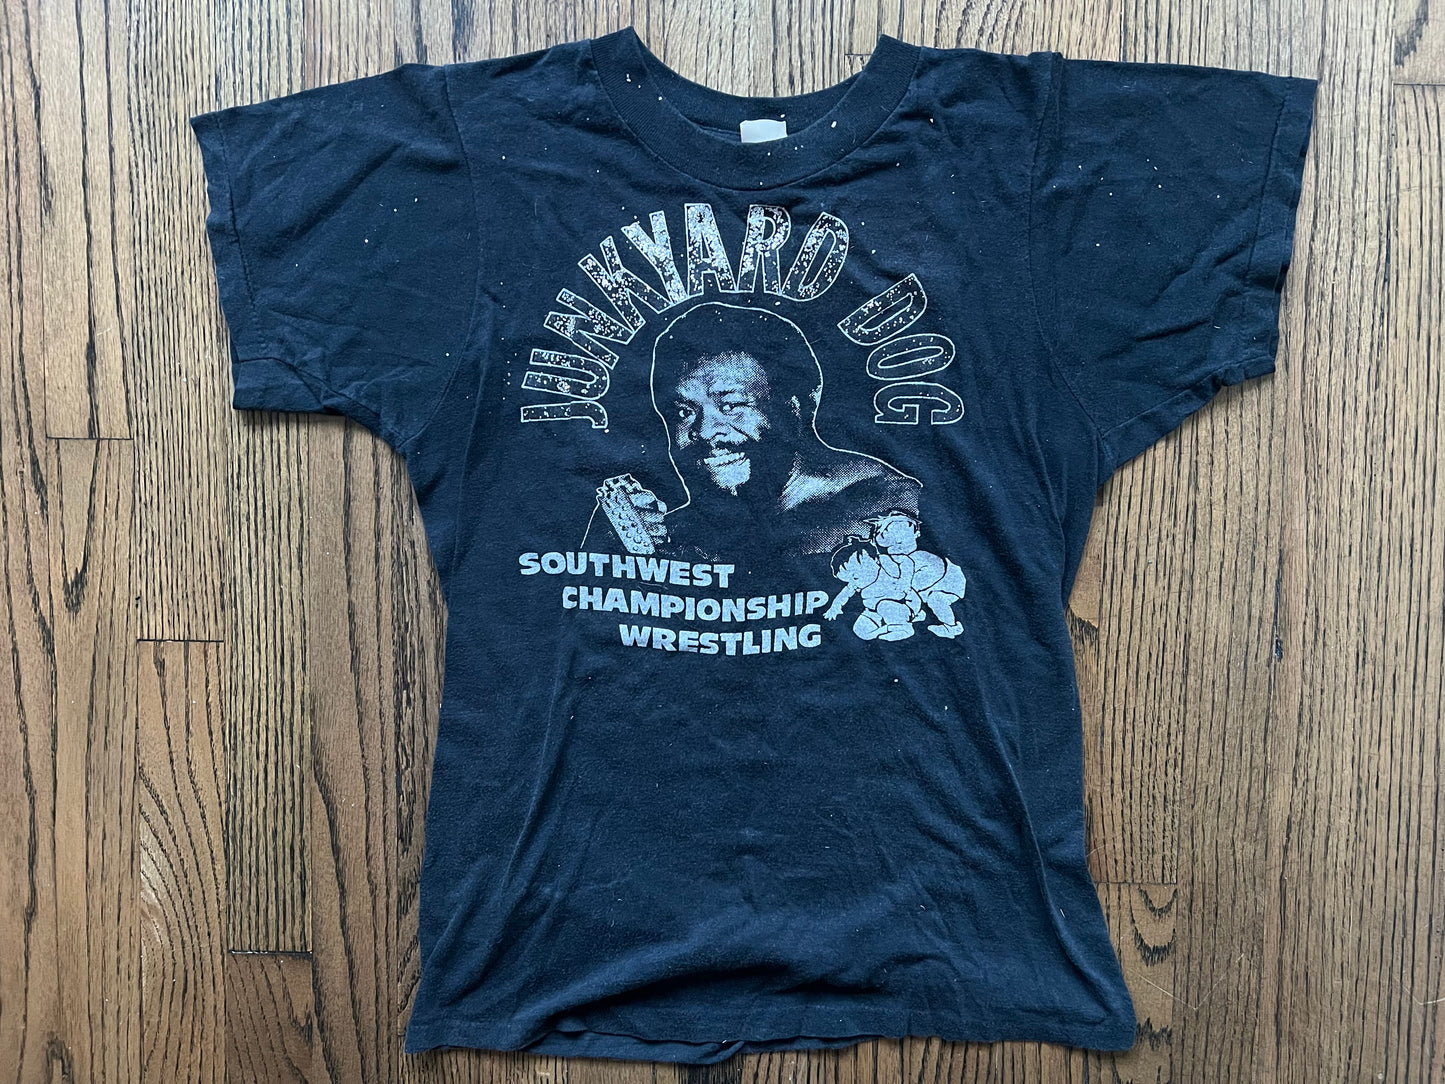 1982 NWA Southwest Championship Wrestling Junkyard Dog shirt - sparkles can be removed